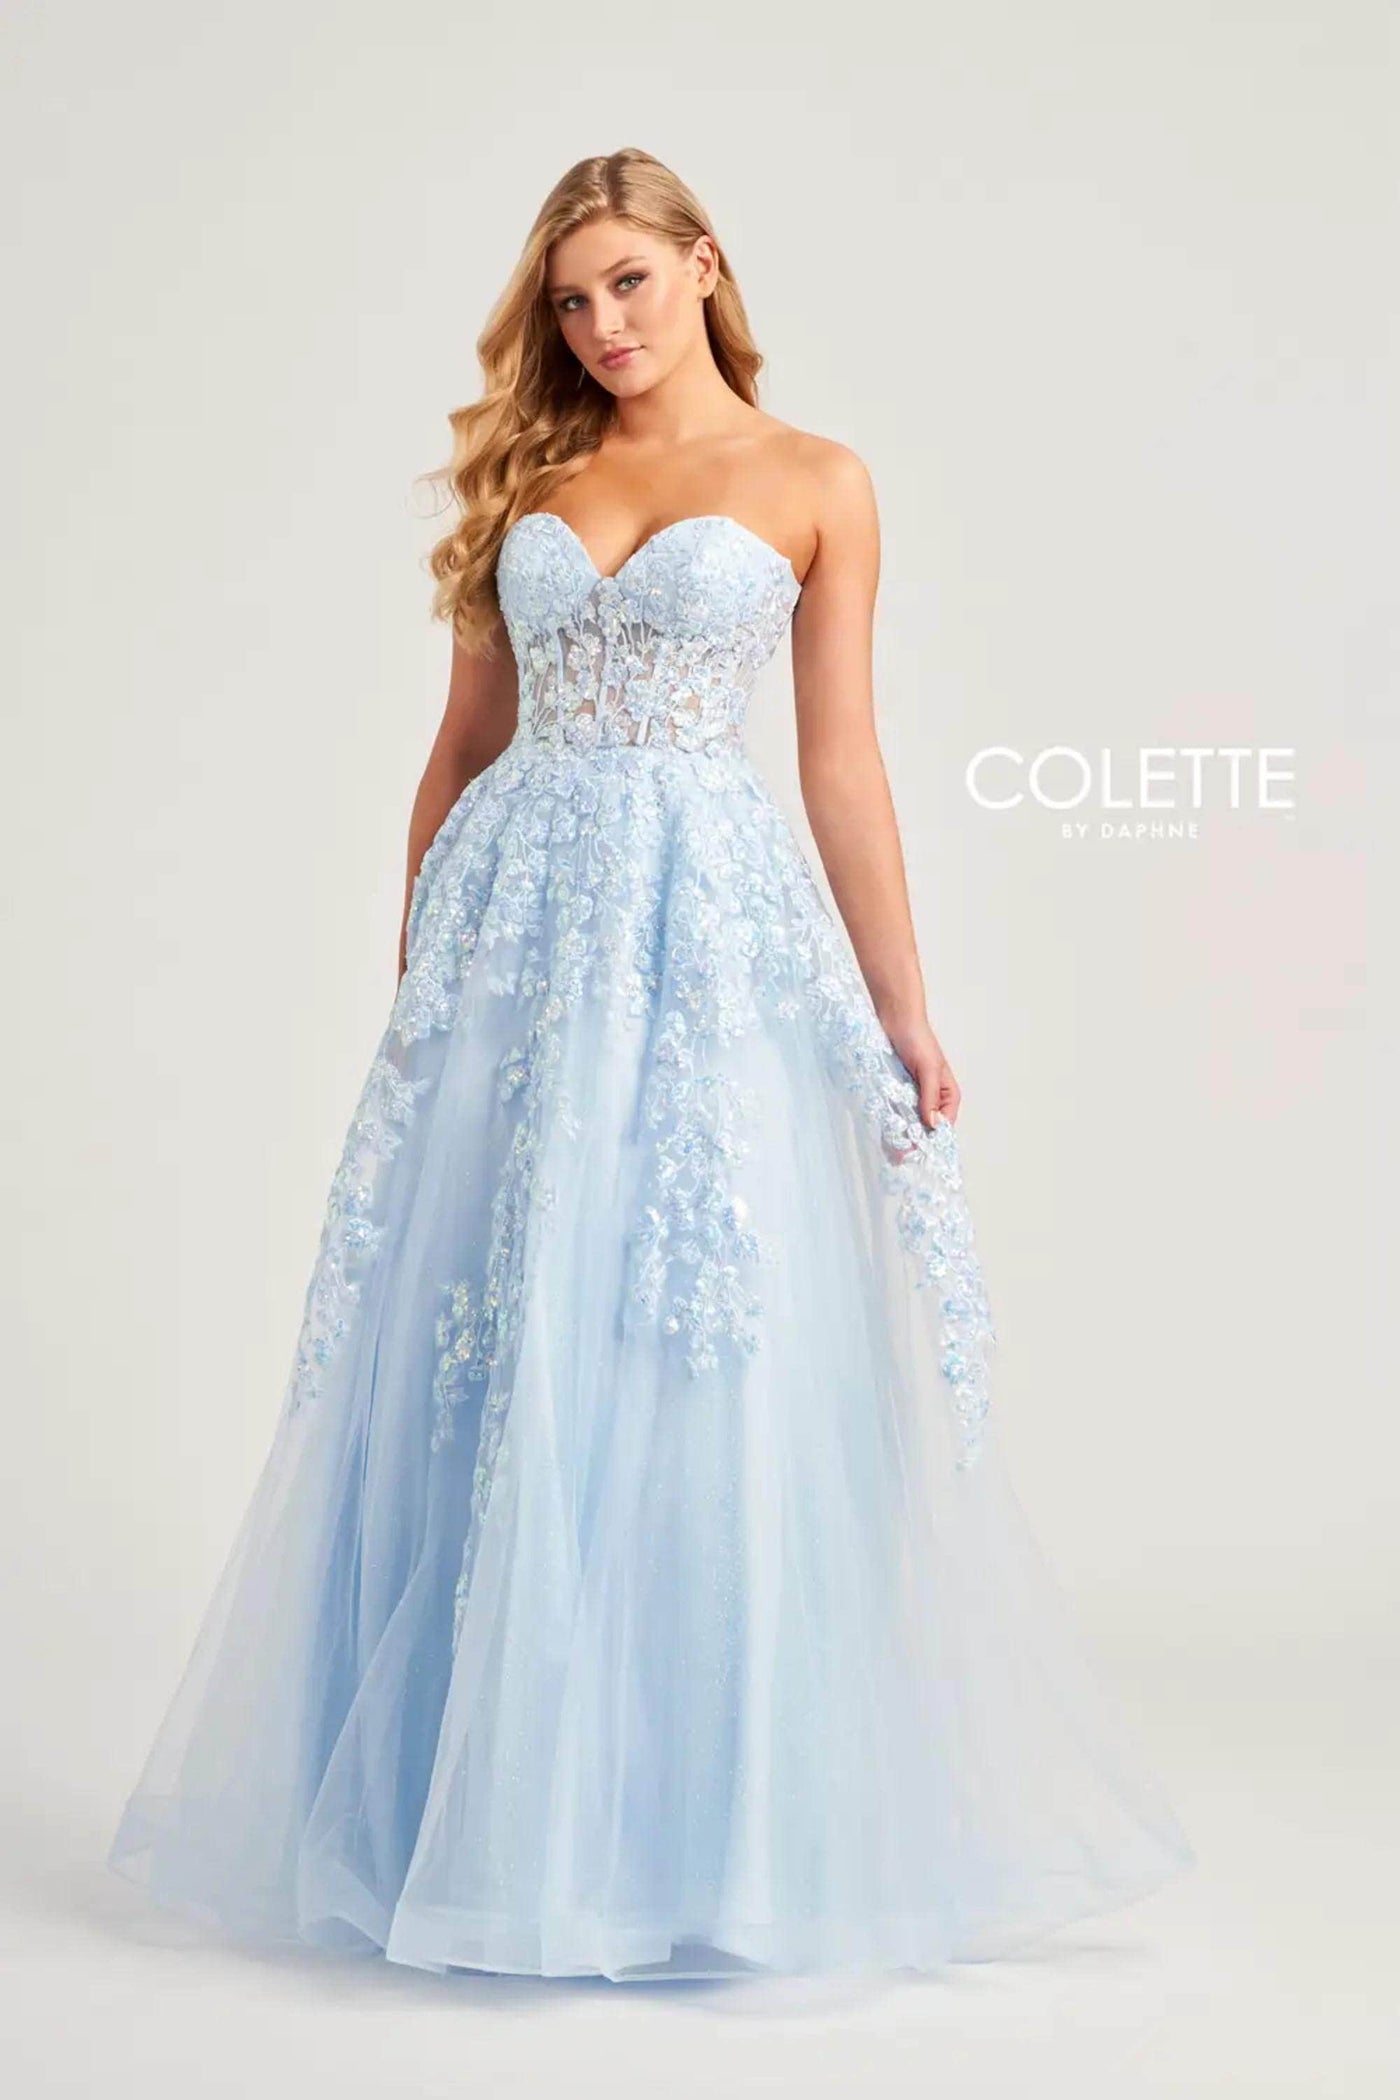 Colette By Daphne CL5136 - Applique Sweetheart Prom Dress